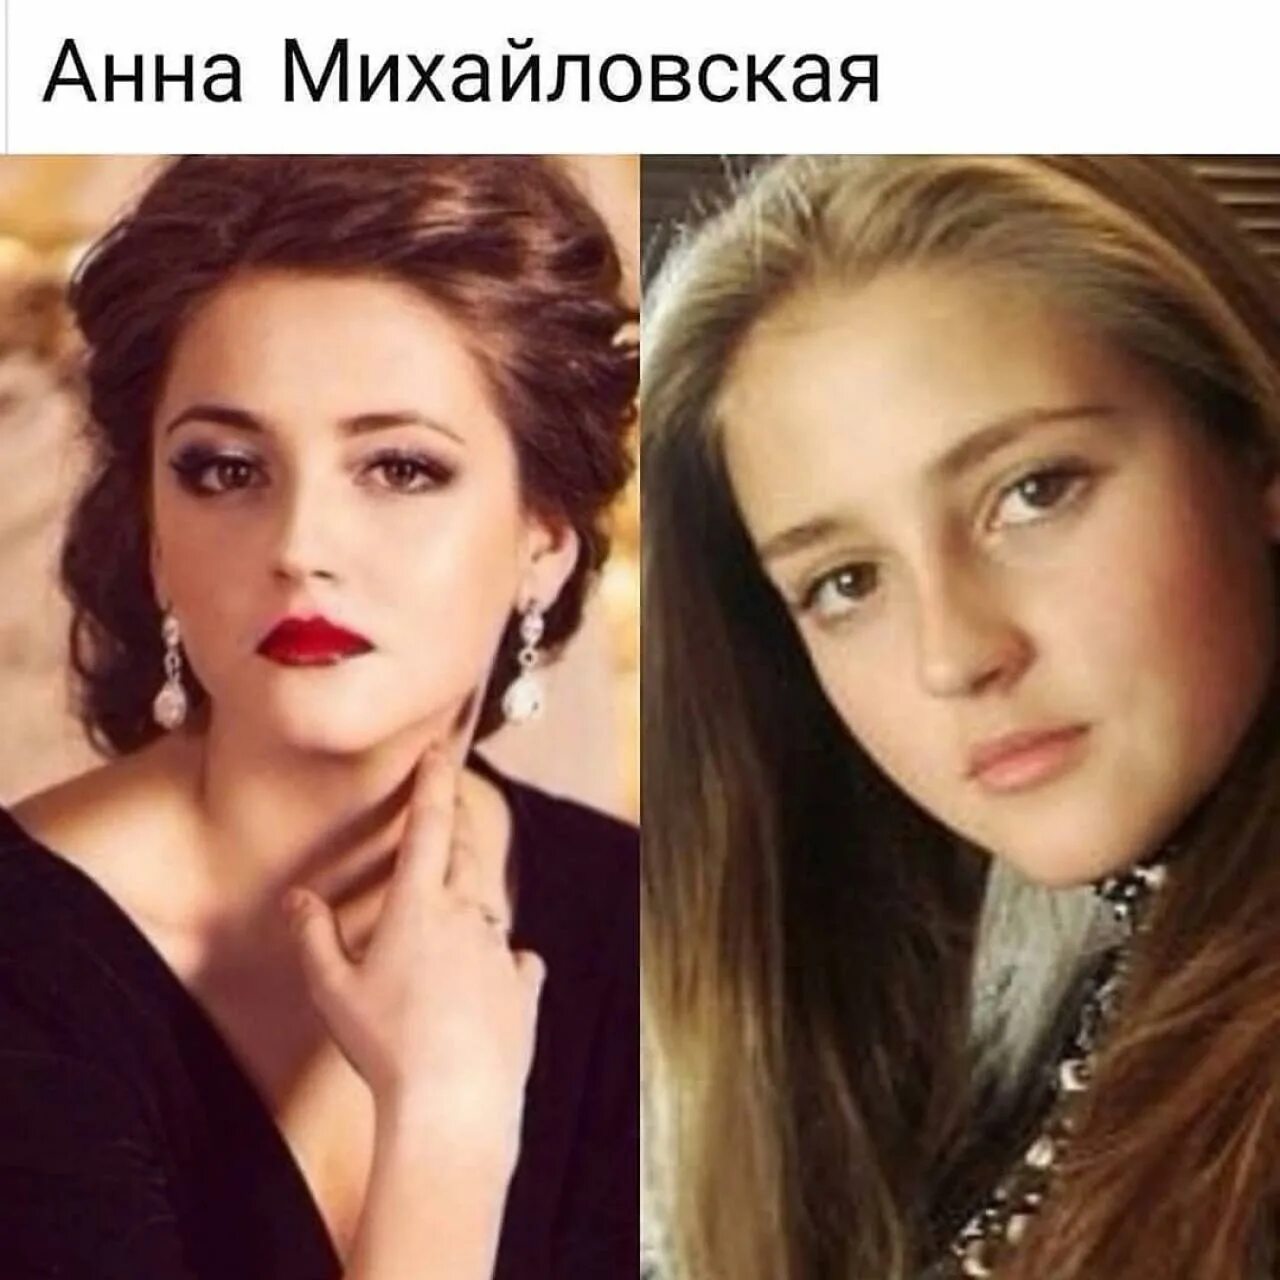 Похожа на актрису анну. Актриса похожая на анну Михайловскую.